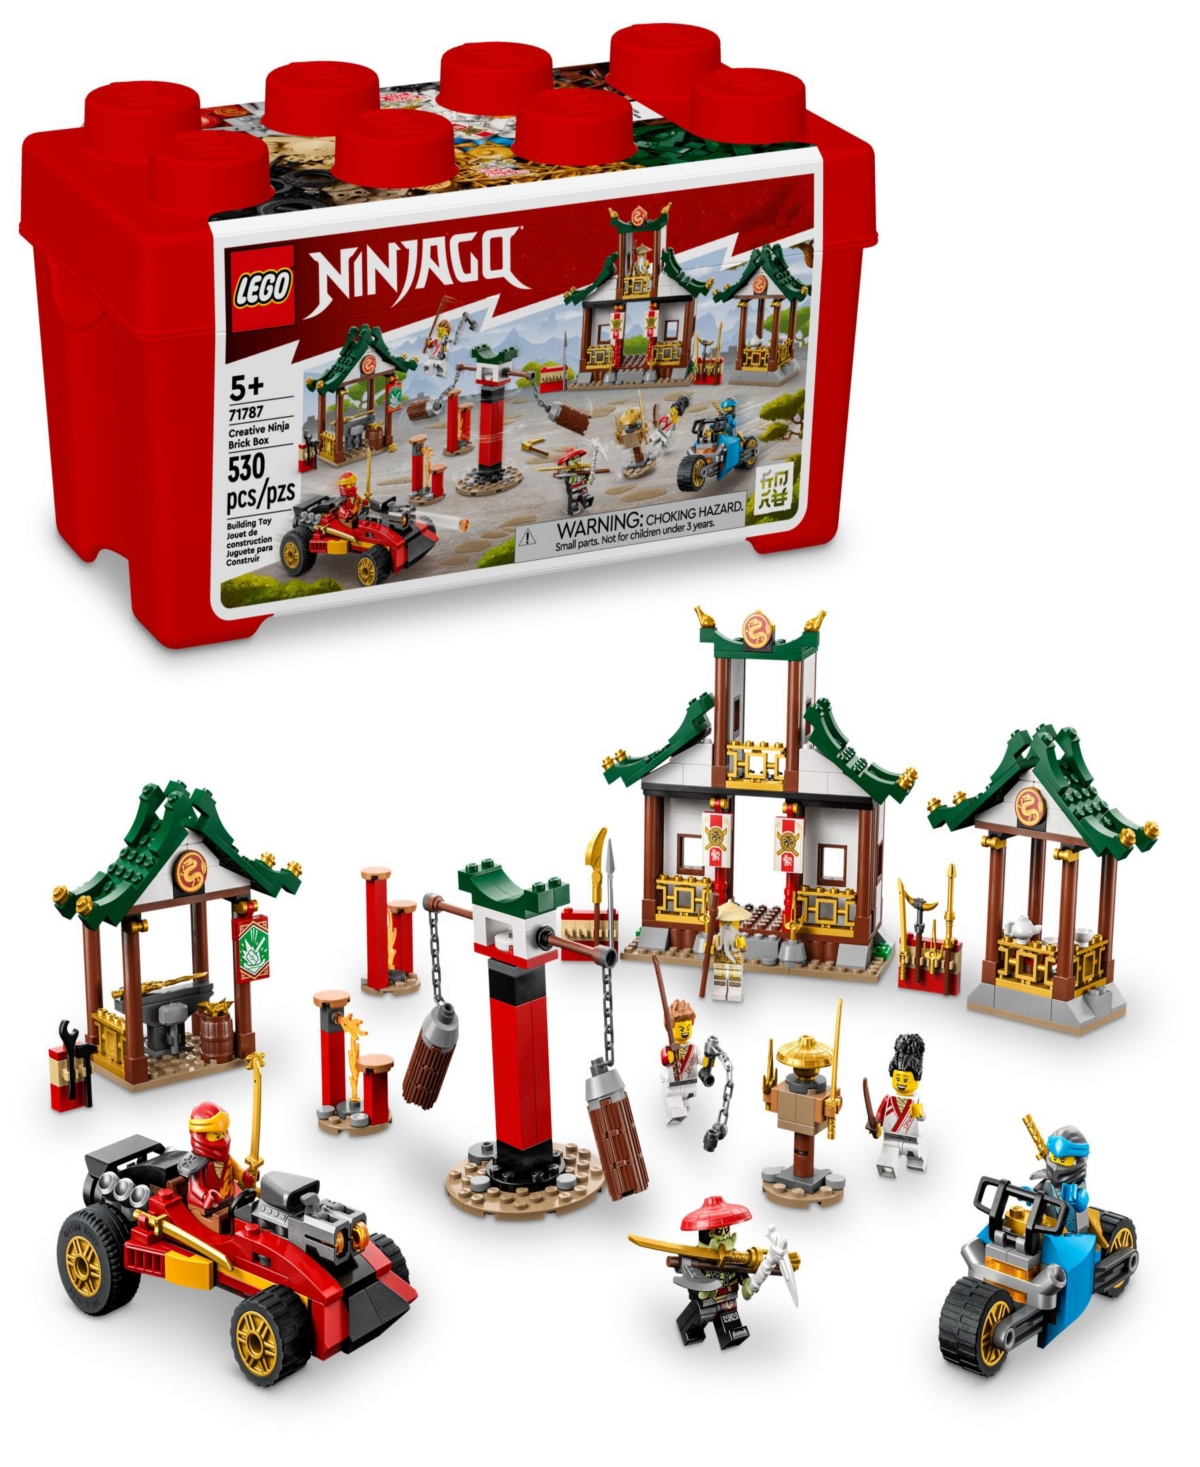 Lego Ninjago Creative Ninja Brick Box 71787 Toy Building Set With Kai, Nya, Master Wu, Apprentices And Bo In Multicolor